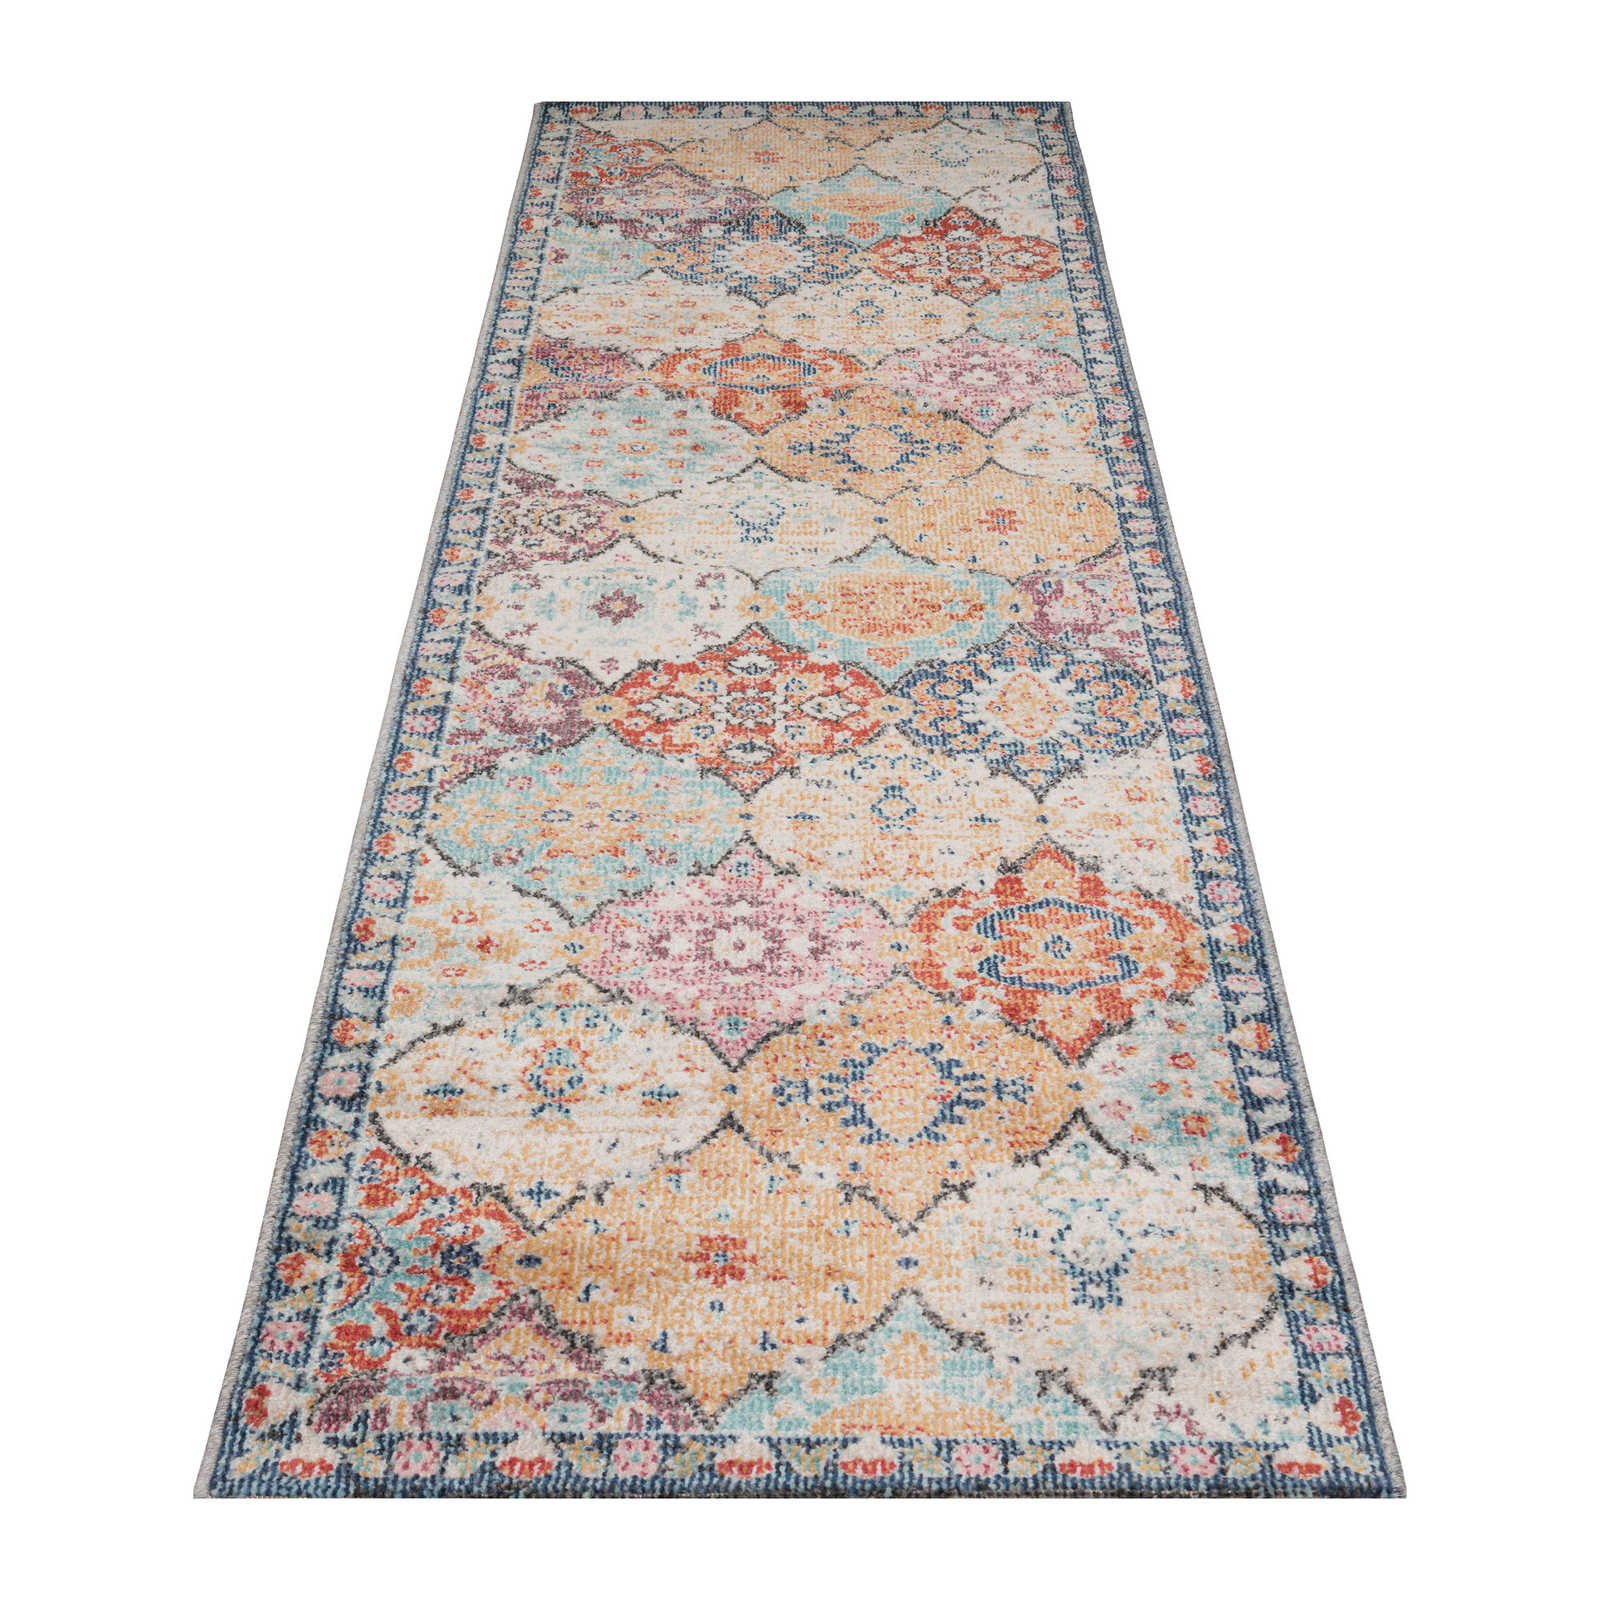 Colourful flatweave carpet as runner - 300 x 80 cm
